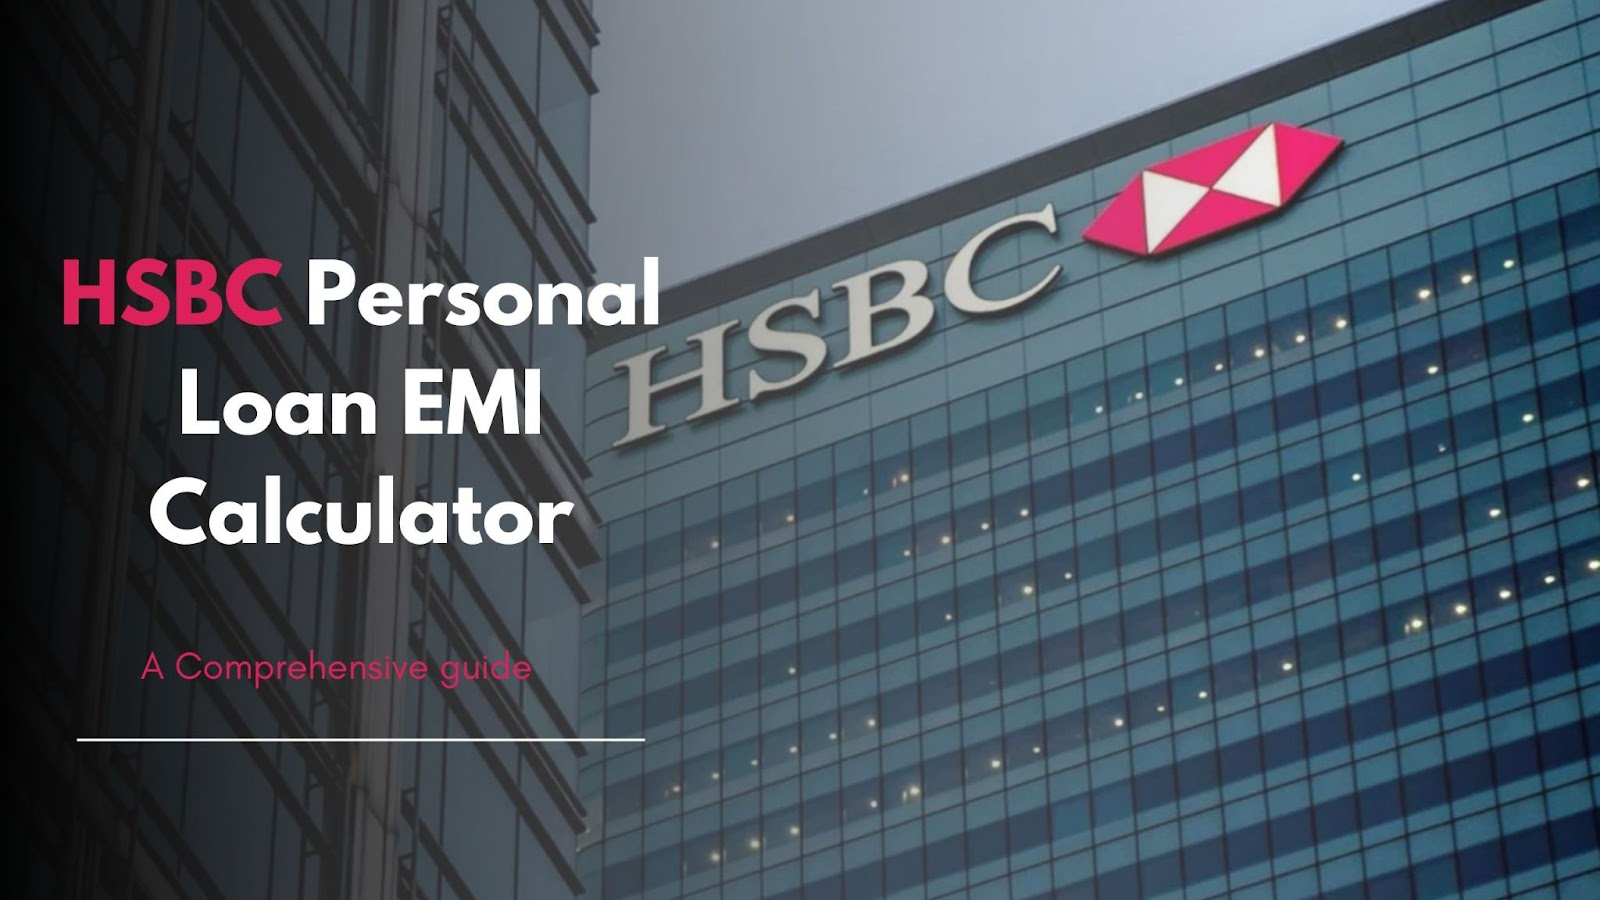 HSBC Personal Loan Calculator